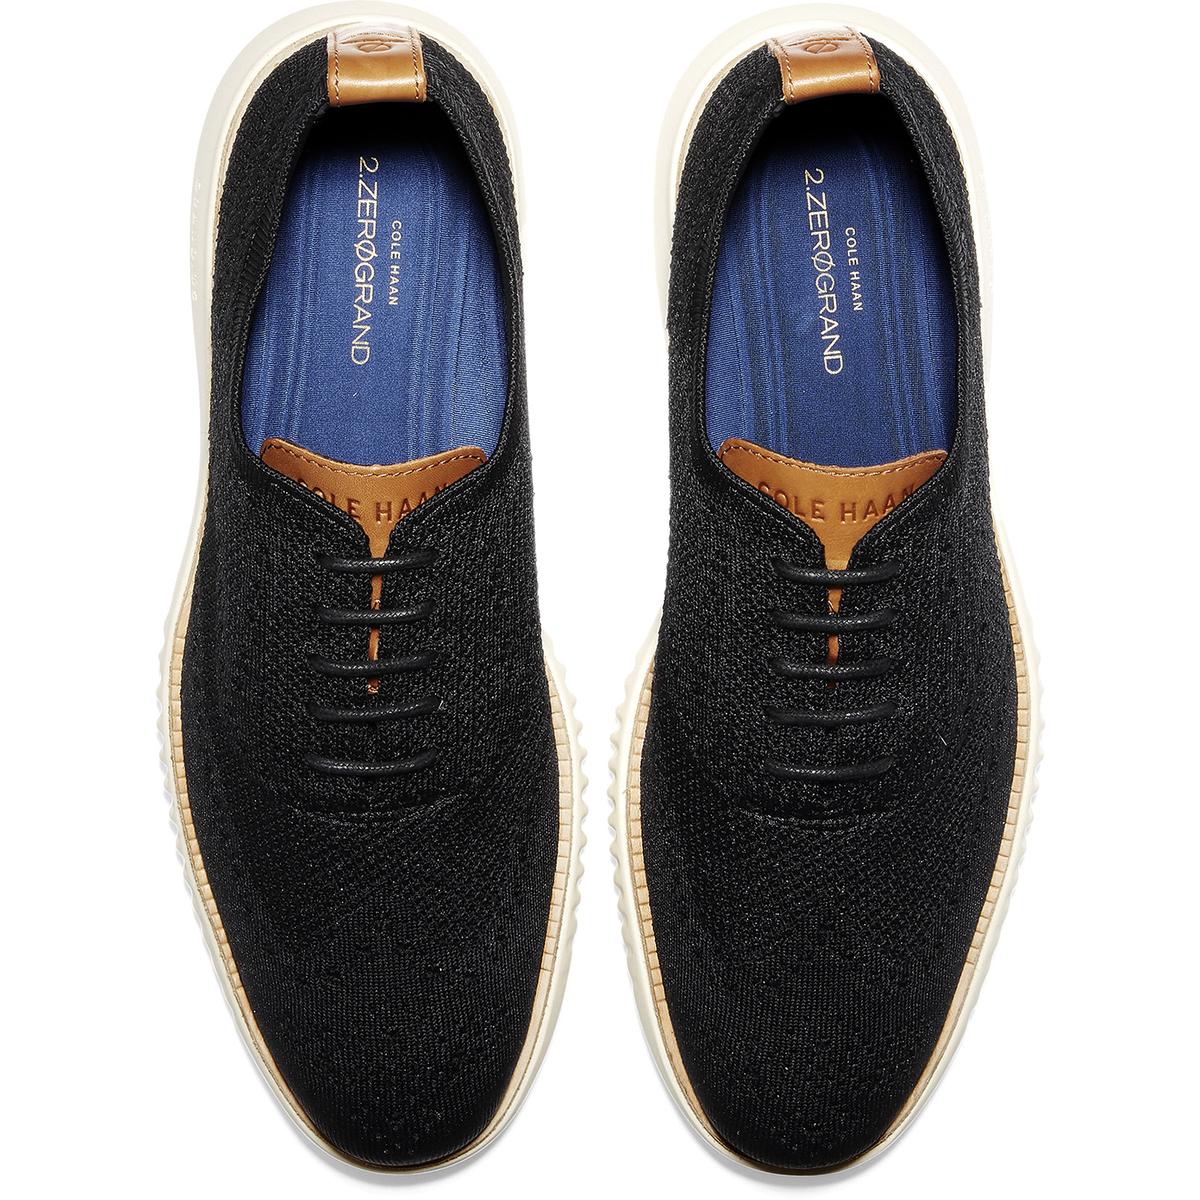 Cole Haan Mens 2.Zerogrand Black-Ivory Oxfords Shoes 11.5 Medium (D ...